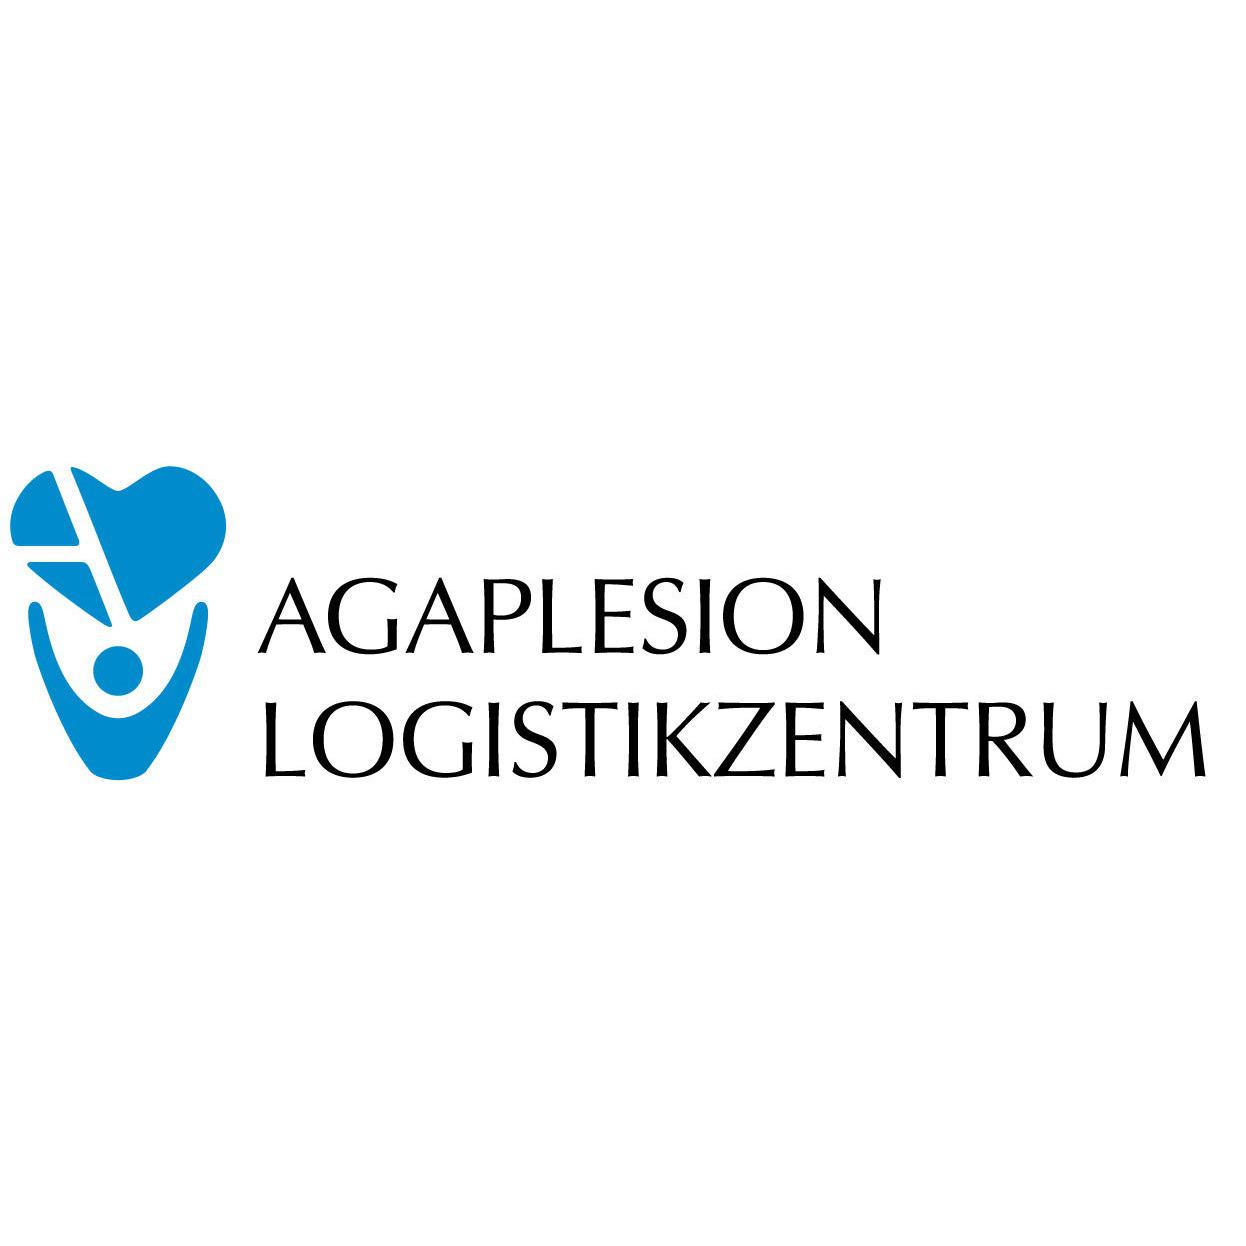 AGAPLESION LOGISTIKZENTRUM in Obertshausen - Logo